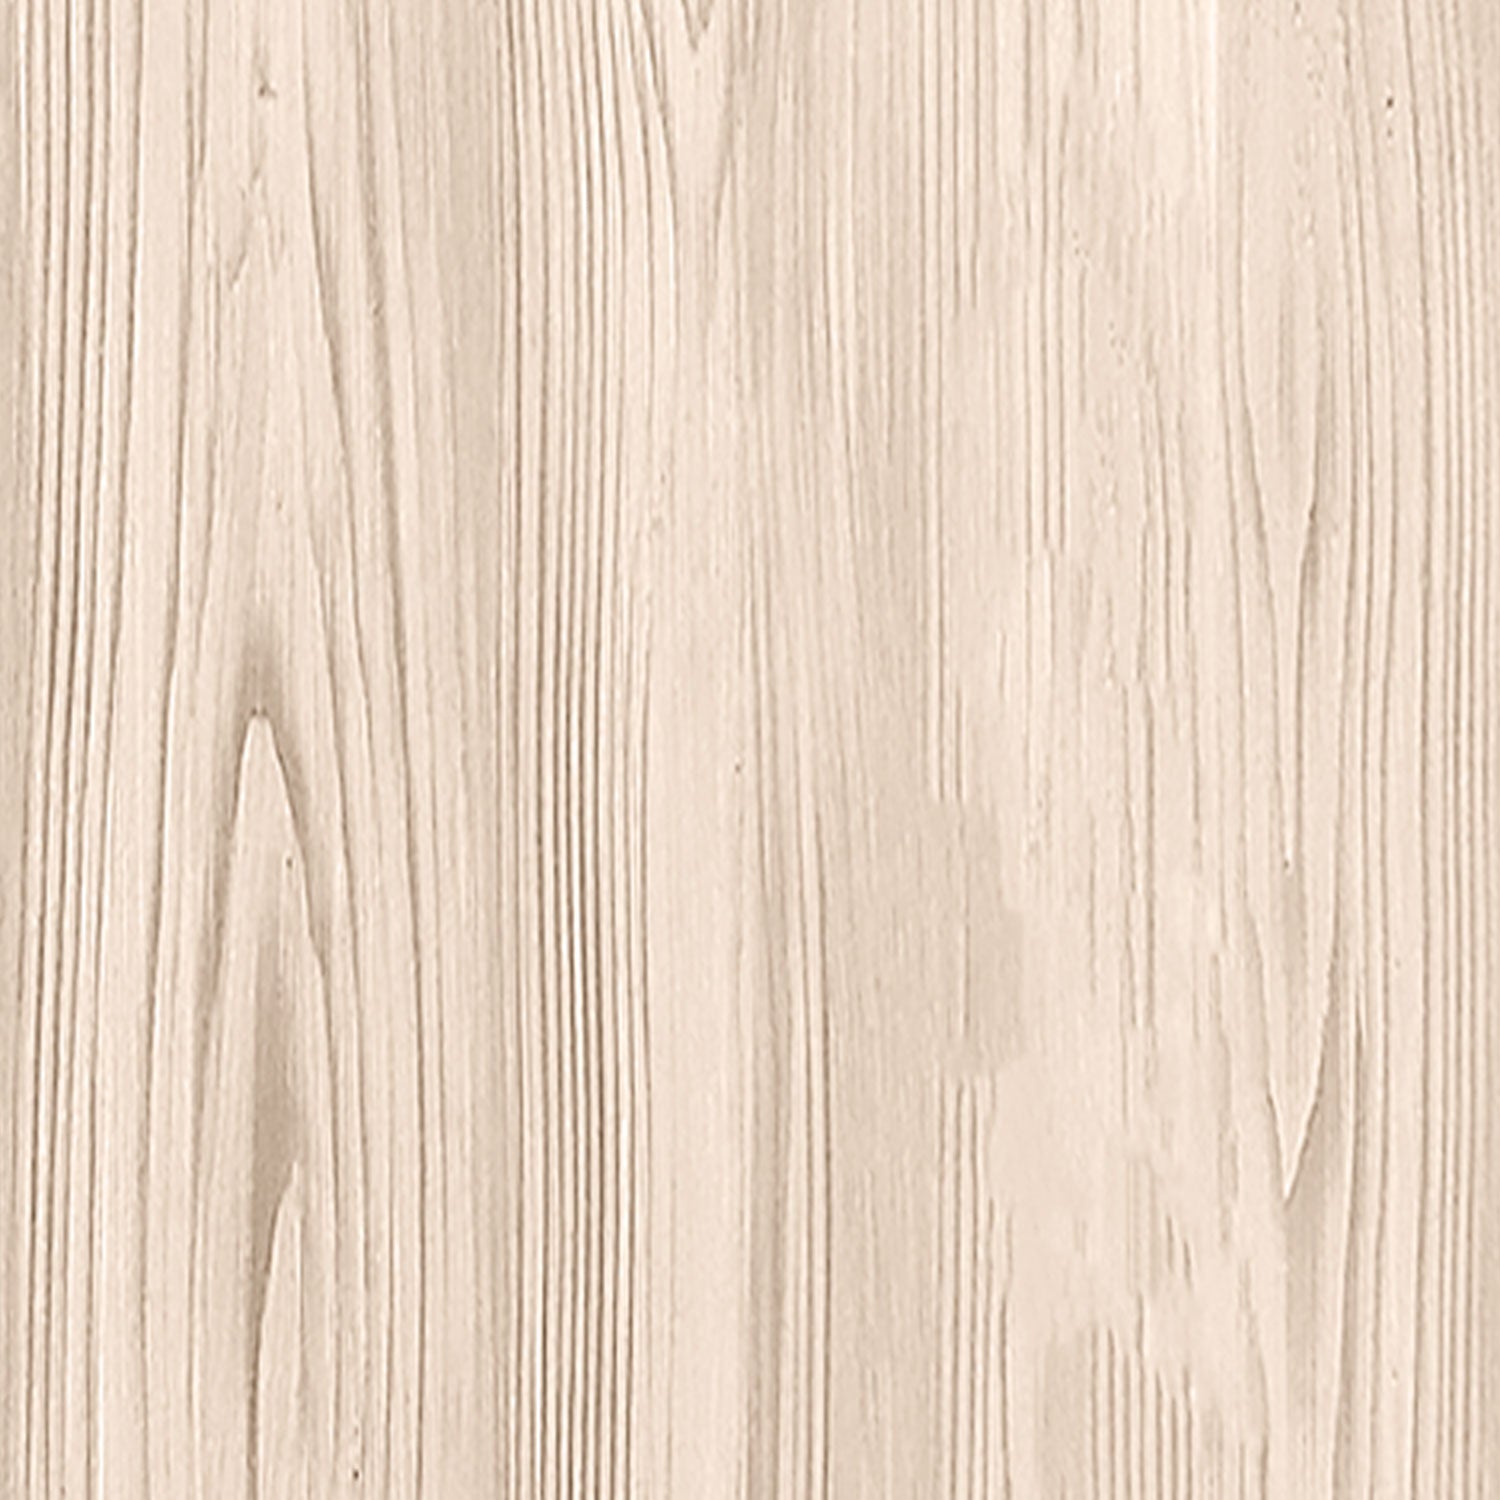 Tabletop Wood'n Finish Kit - White Oak